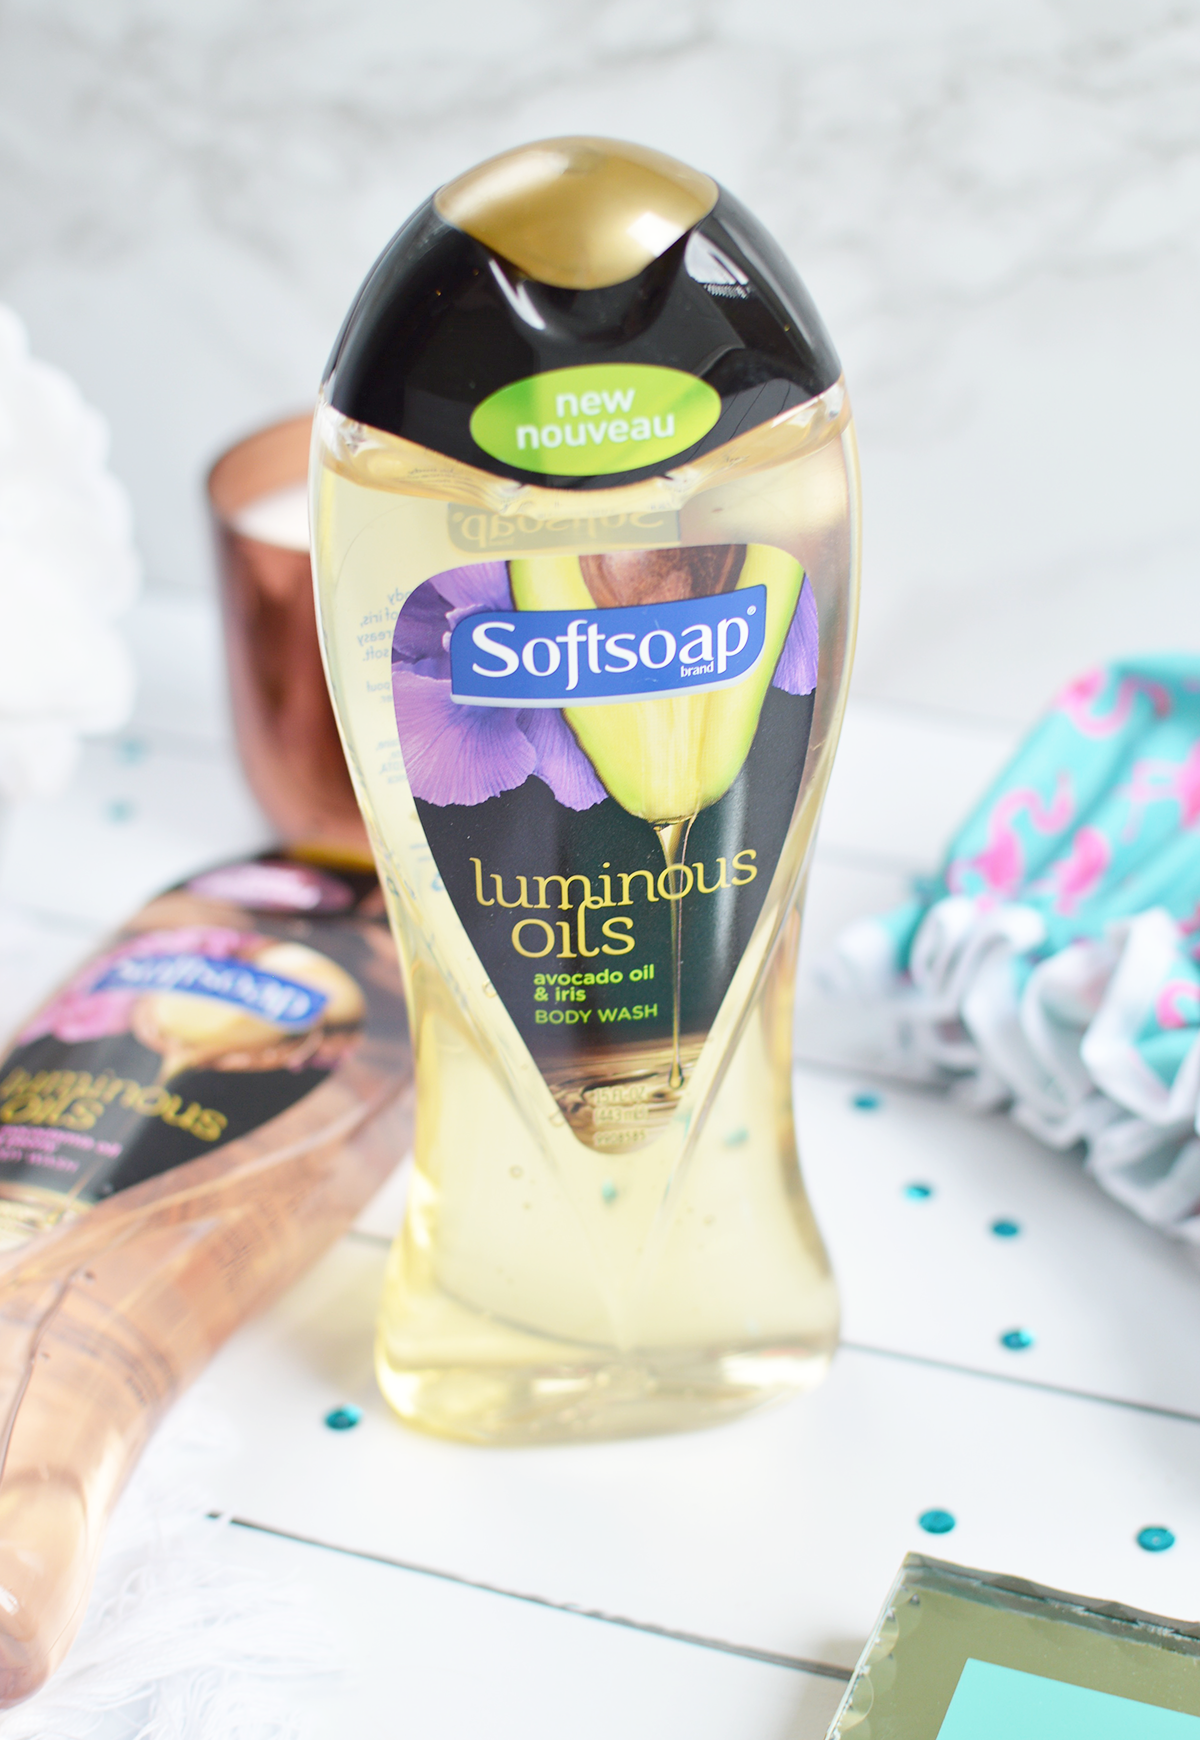 softsoap-luminous-oils-review-3.png